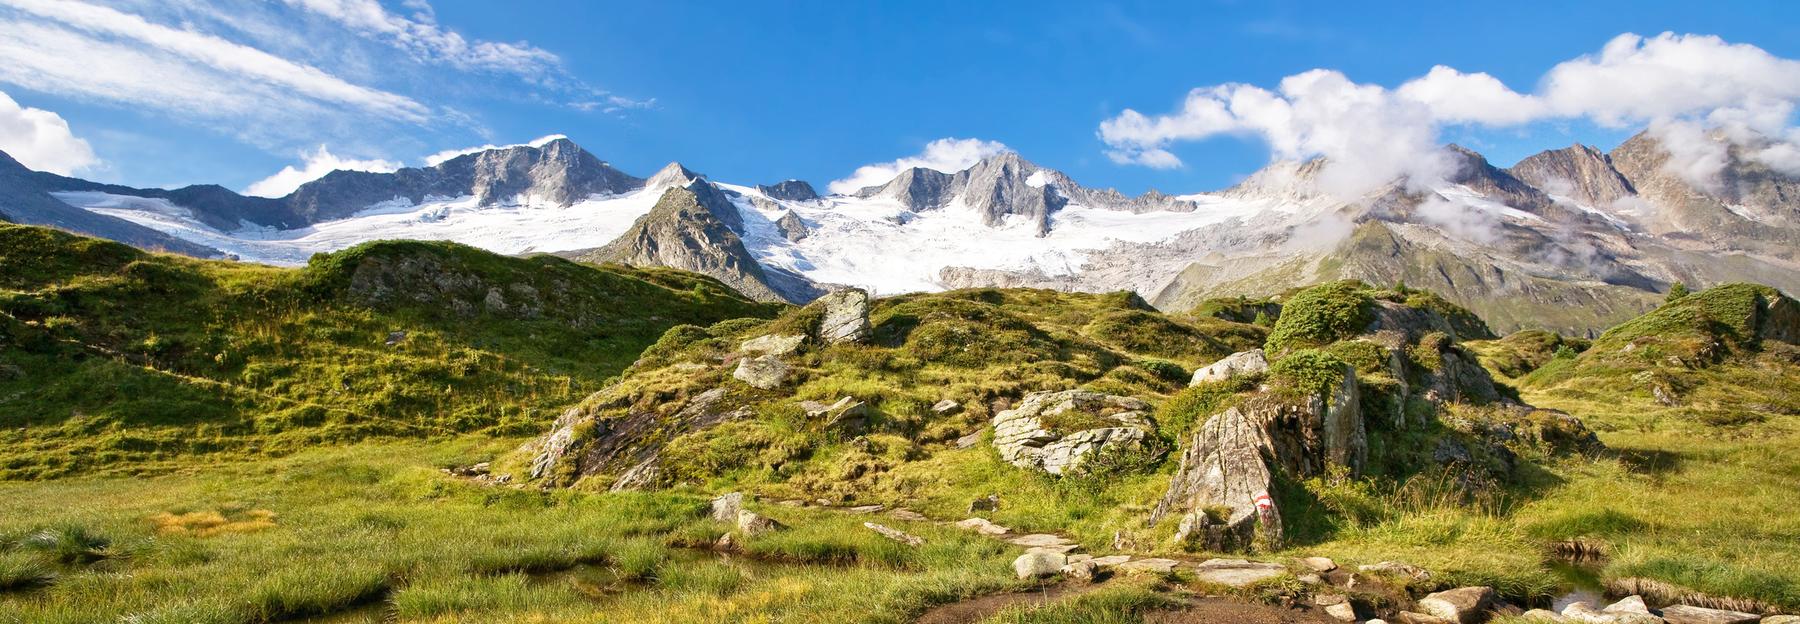 Berglandschaft im Hochgebirgs-Naturpark Zillertaler Alpen